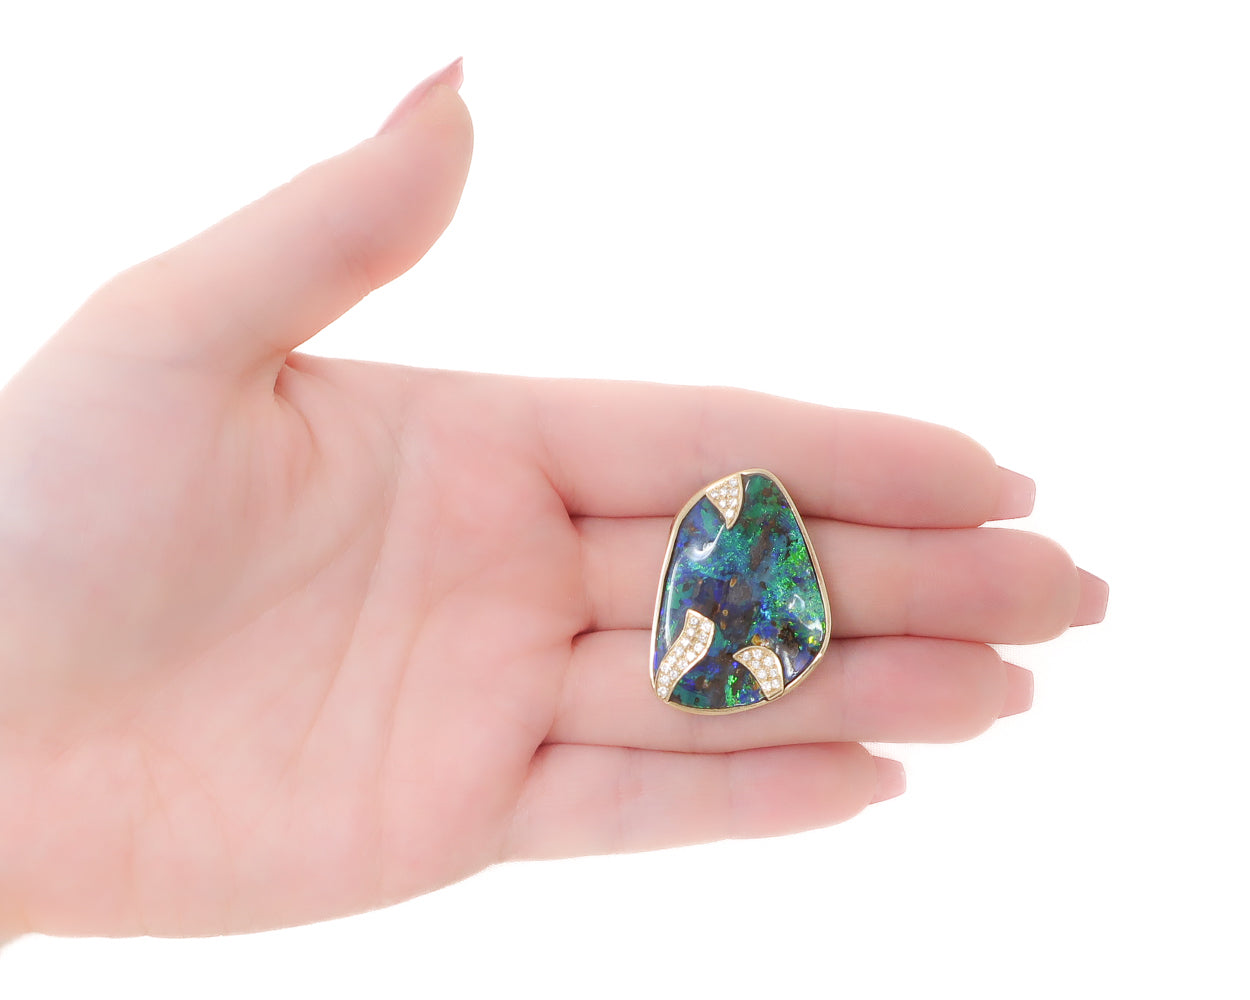 Black Opal & Diamond Pendant